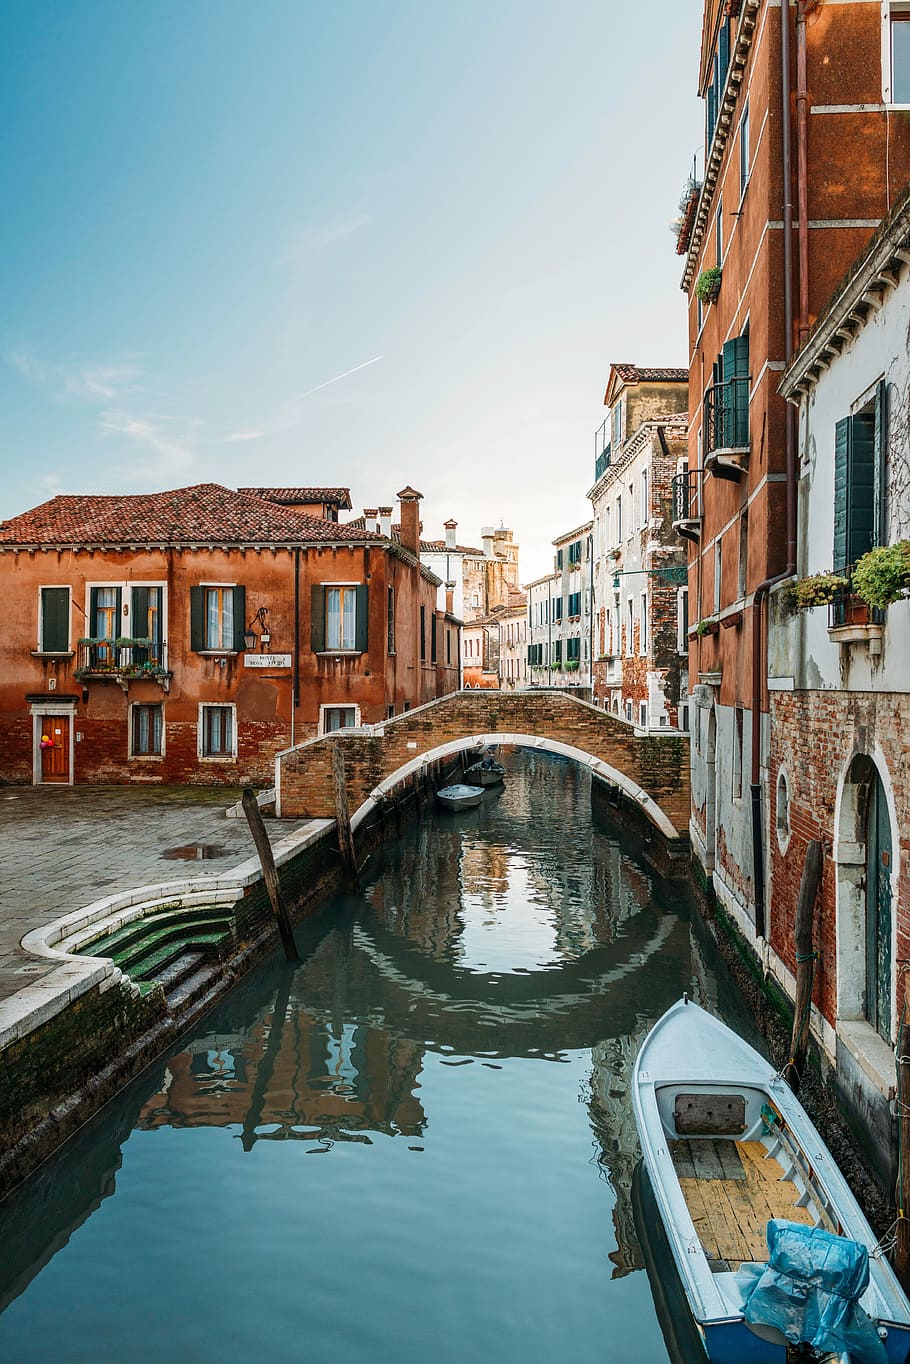 white, boat, grand, canal venice italy, grand canal Venice, Venice Italy, canal, venice - Italy, italy, architecture